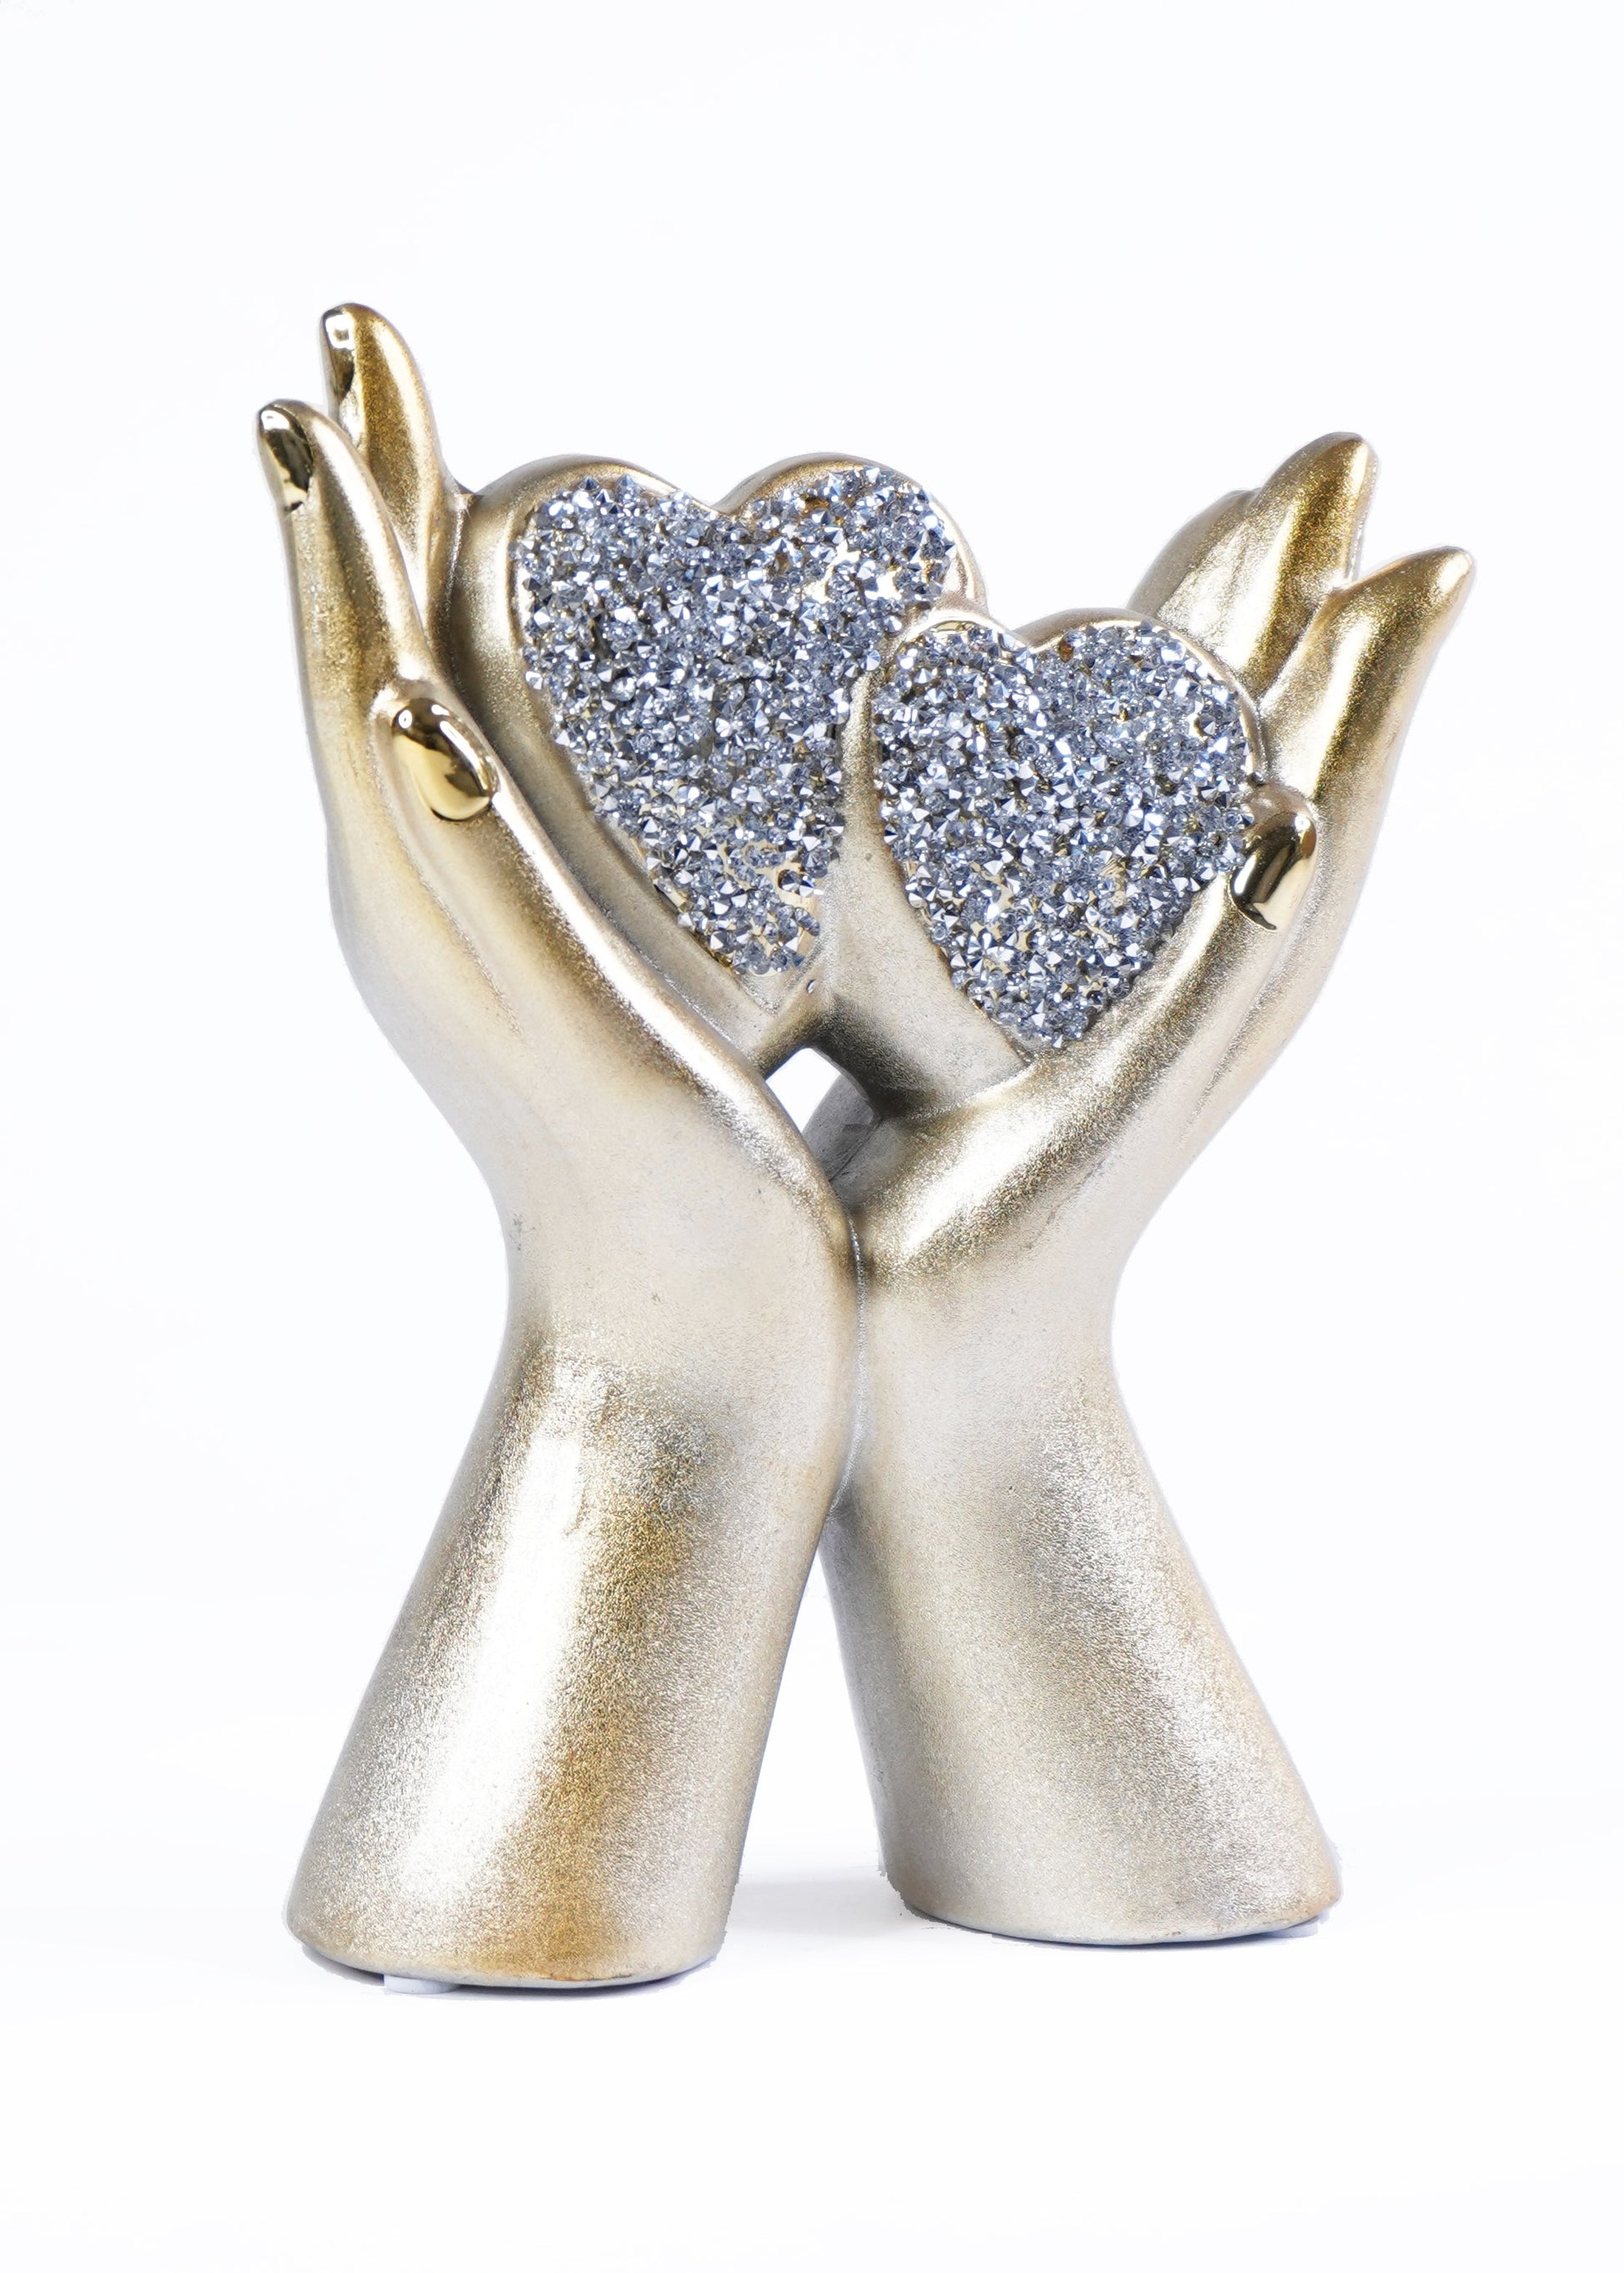 Hands Holding Diamond Hearts Decor - Expo Home Decor